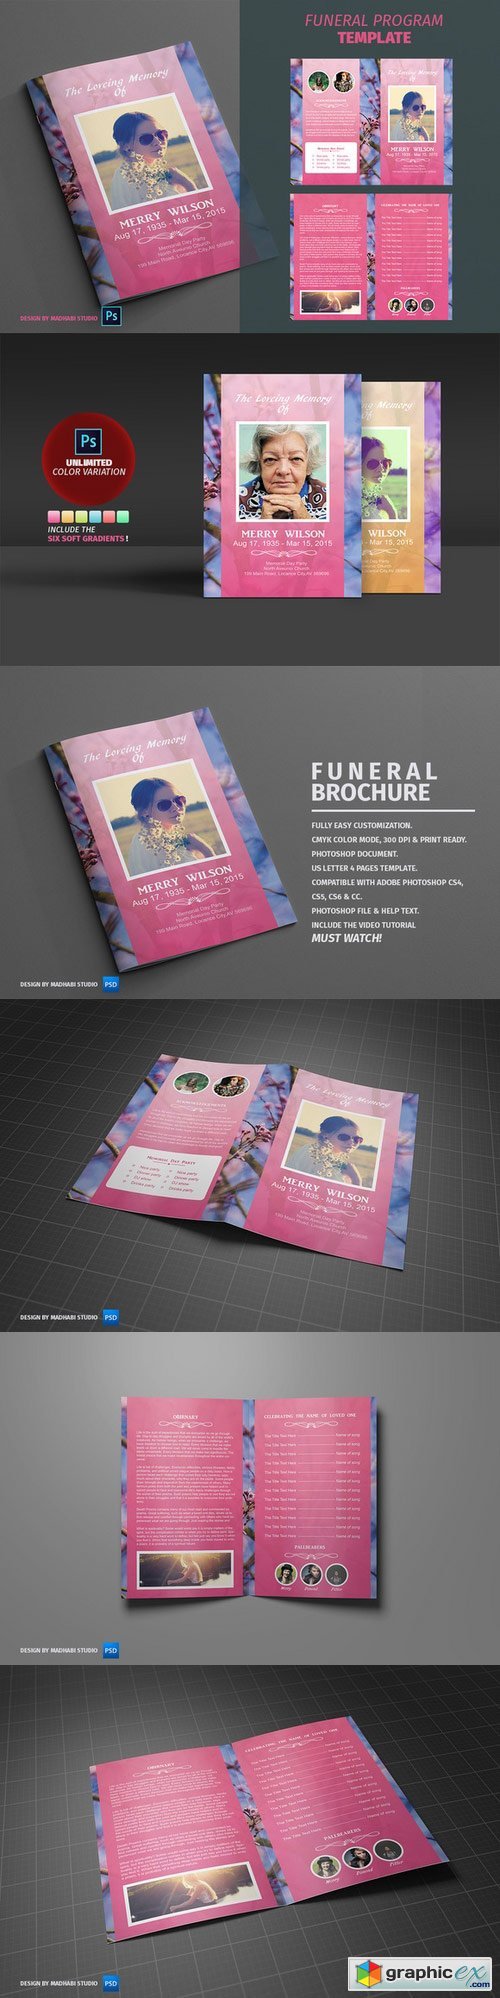 Funeral Program Template vol01